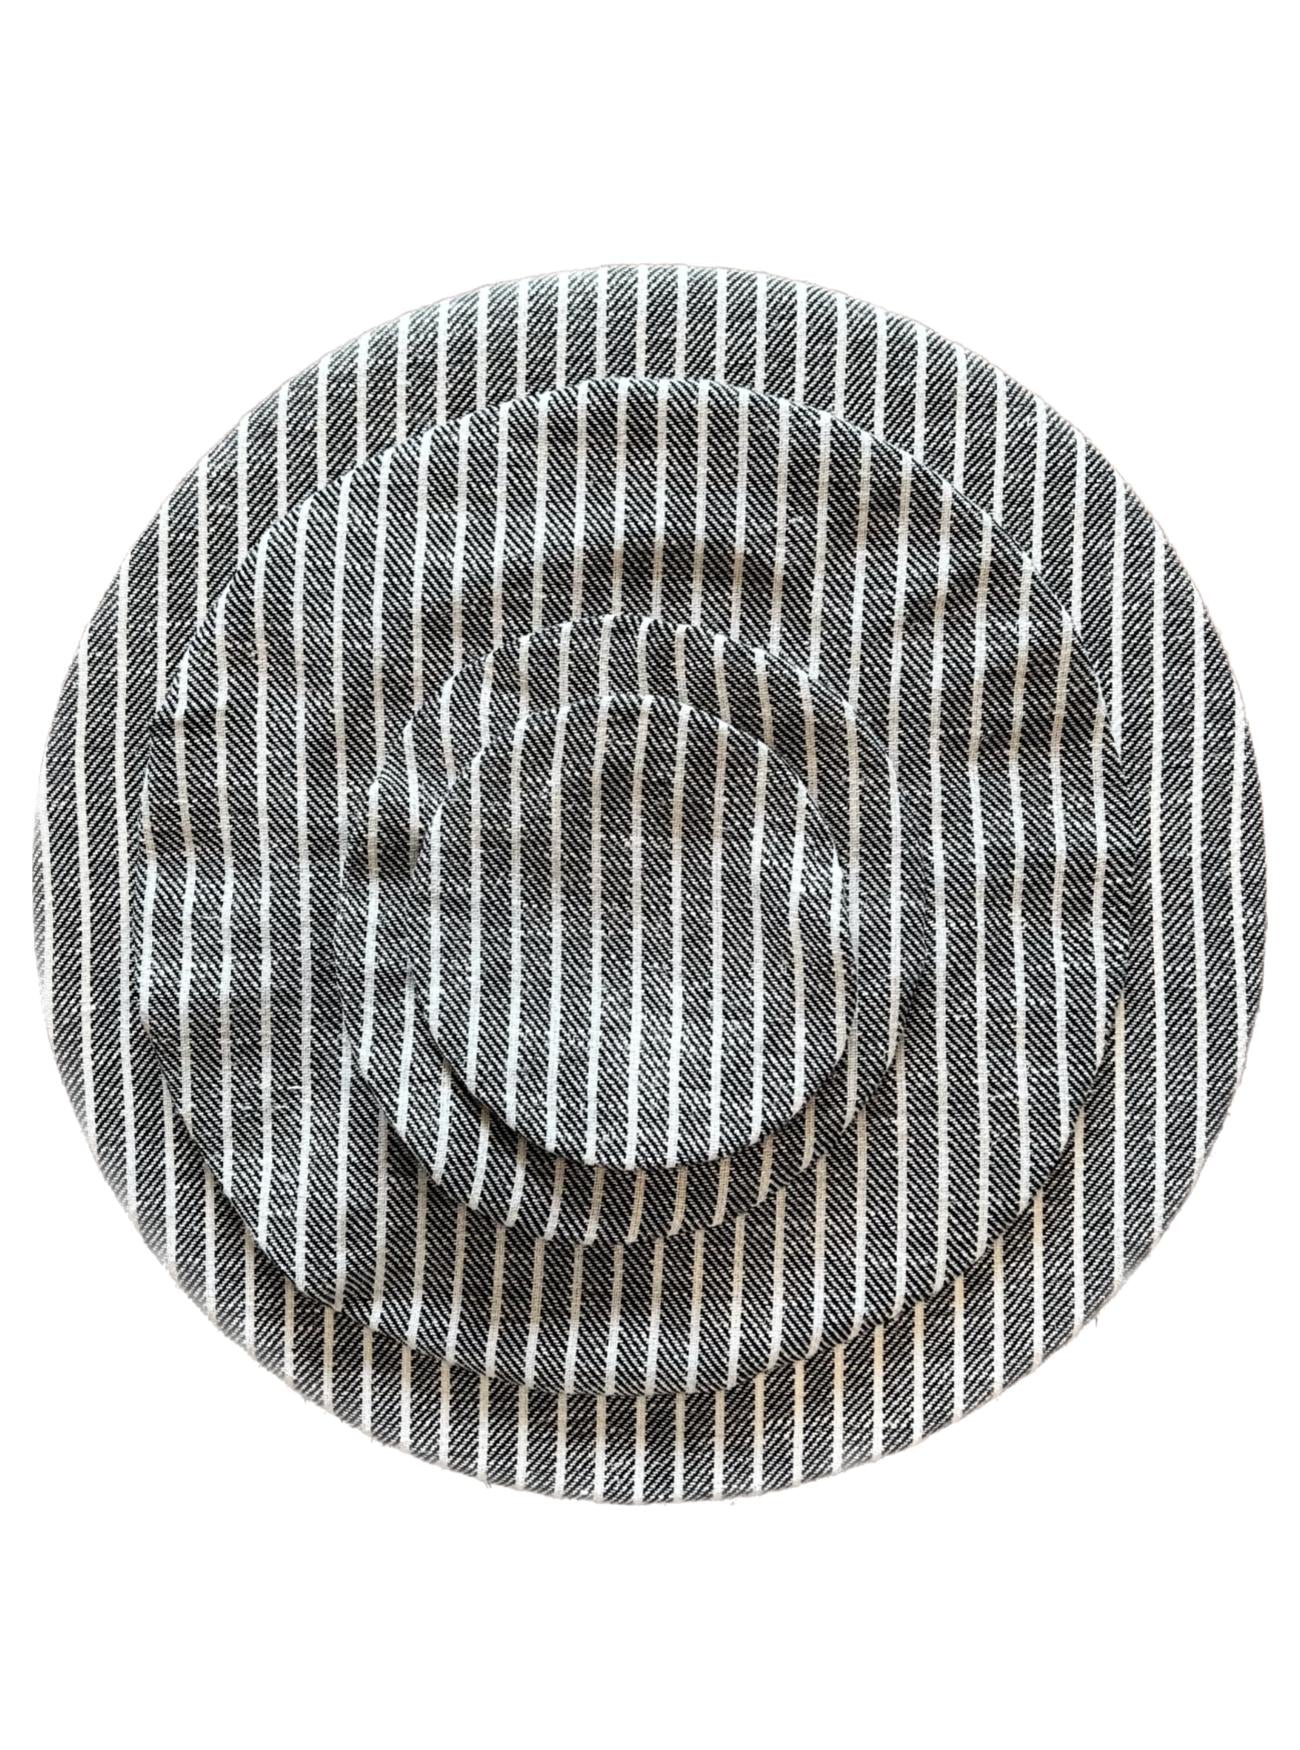 Bowl Cover Set, Charcoal Stripe